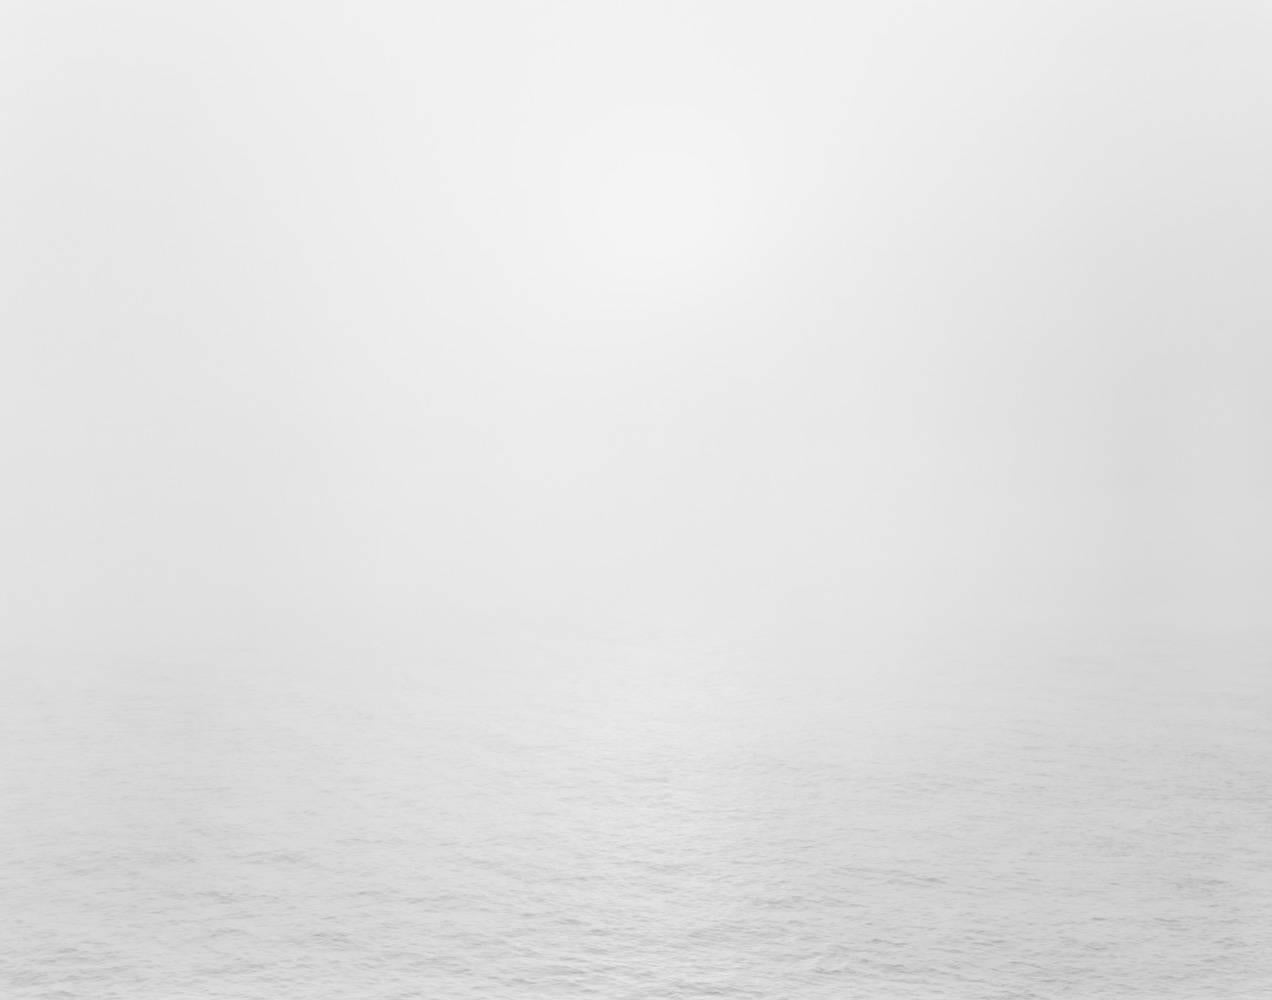 Chip Hooper Black and White Photograph - Sun & Fog, Pacific Ocean